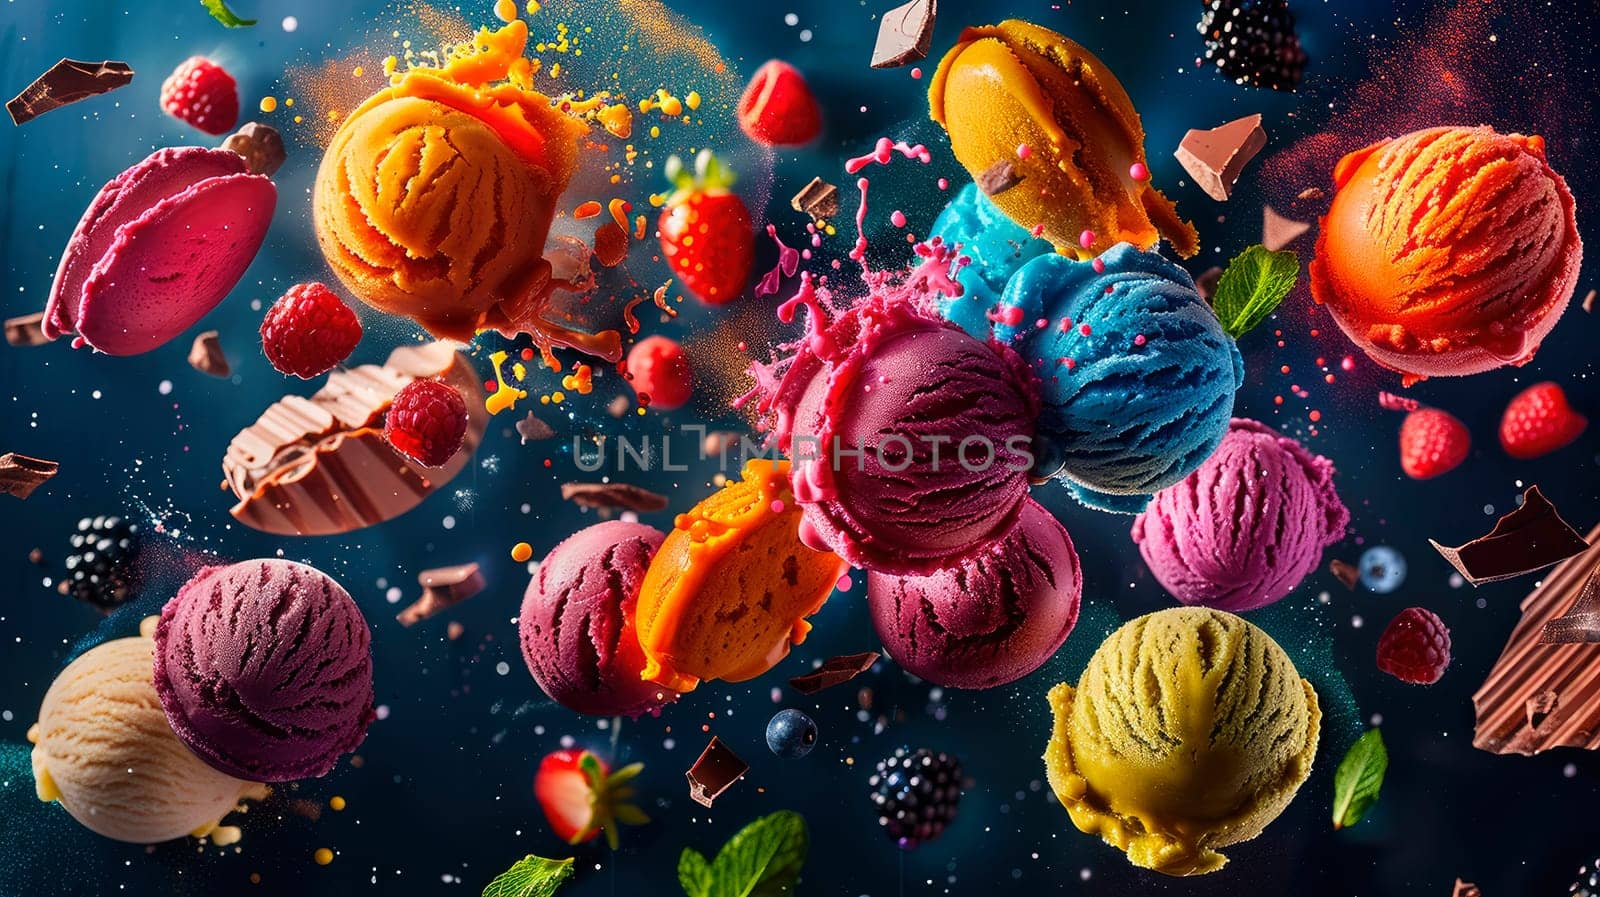 ice cream balls with berries and fruit splash. selective focus. food.